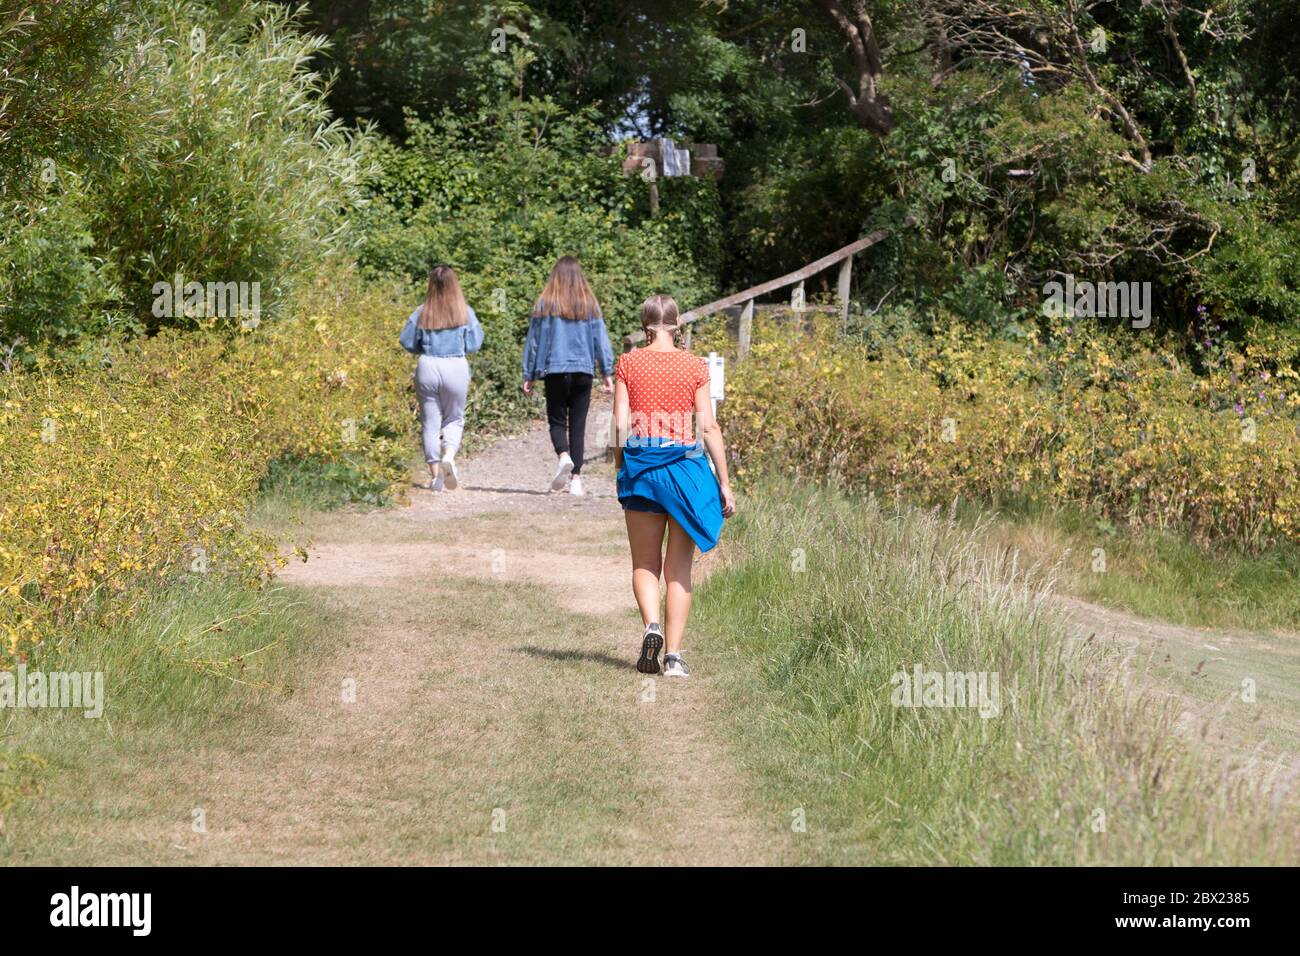 Three young women taking an exercise walk during the coronavirus pandemic. Stock Photo